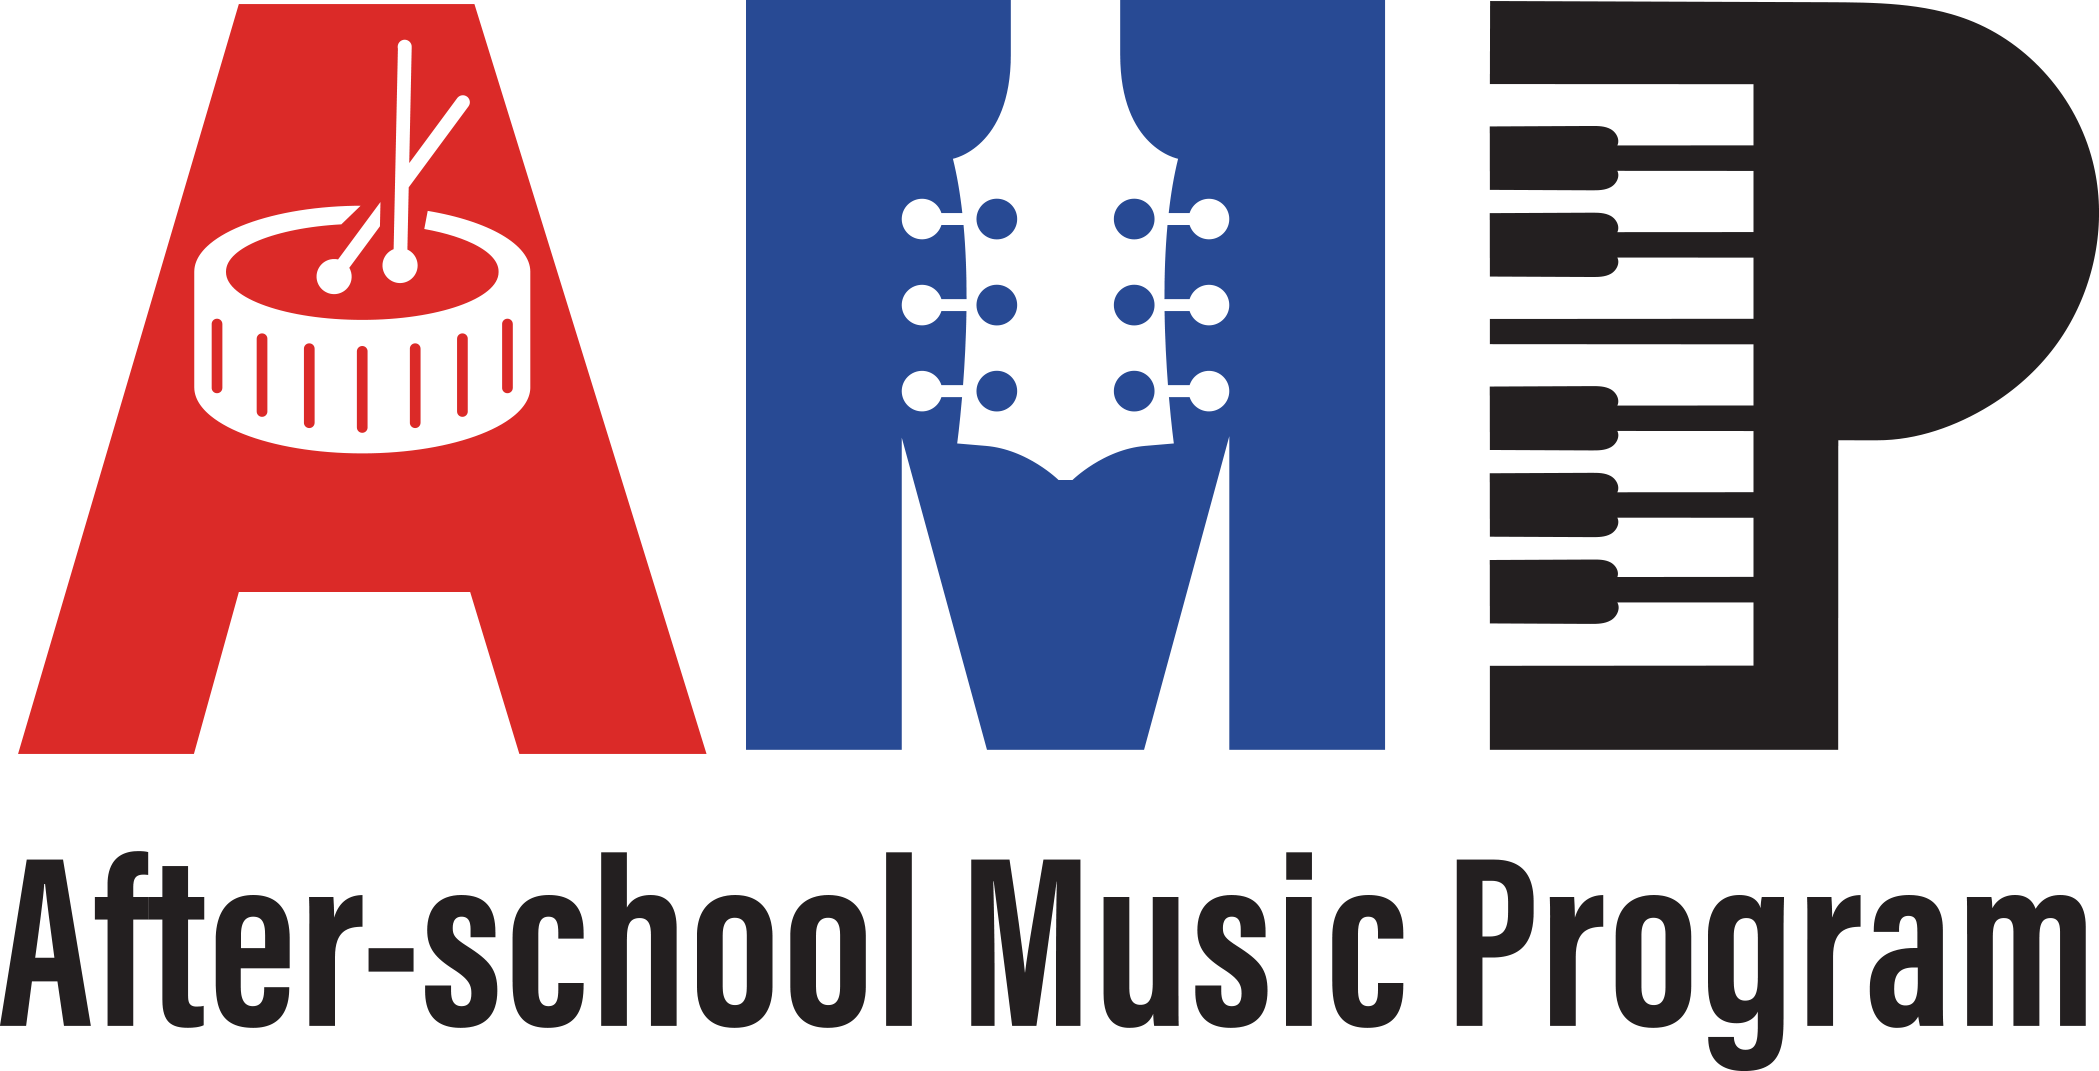 AMP After-school Music Program